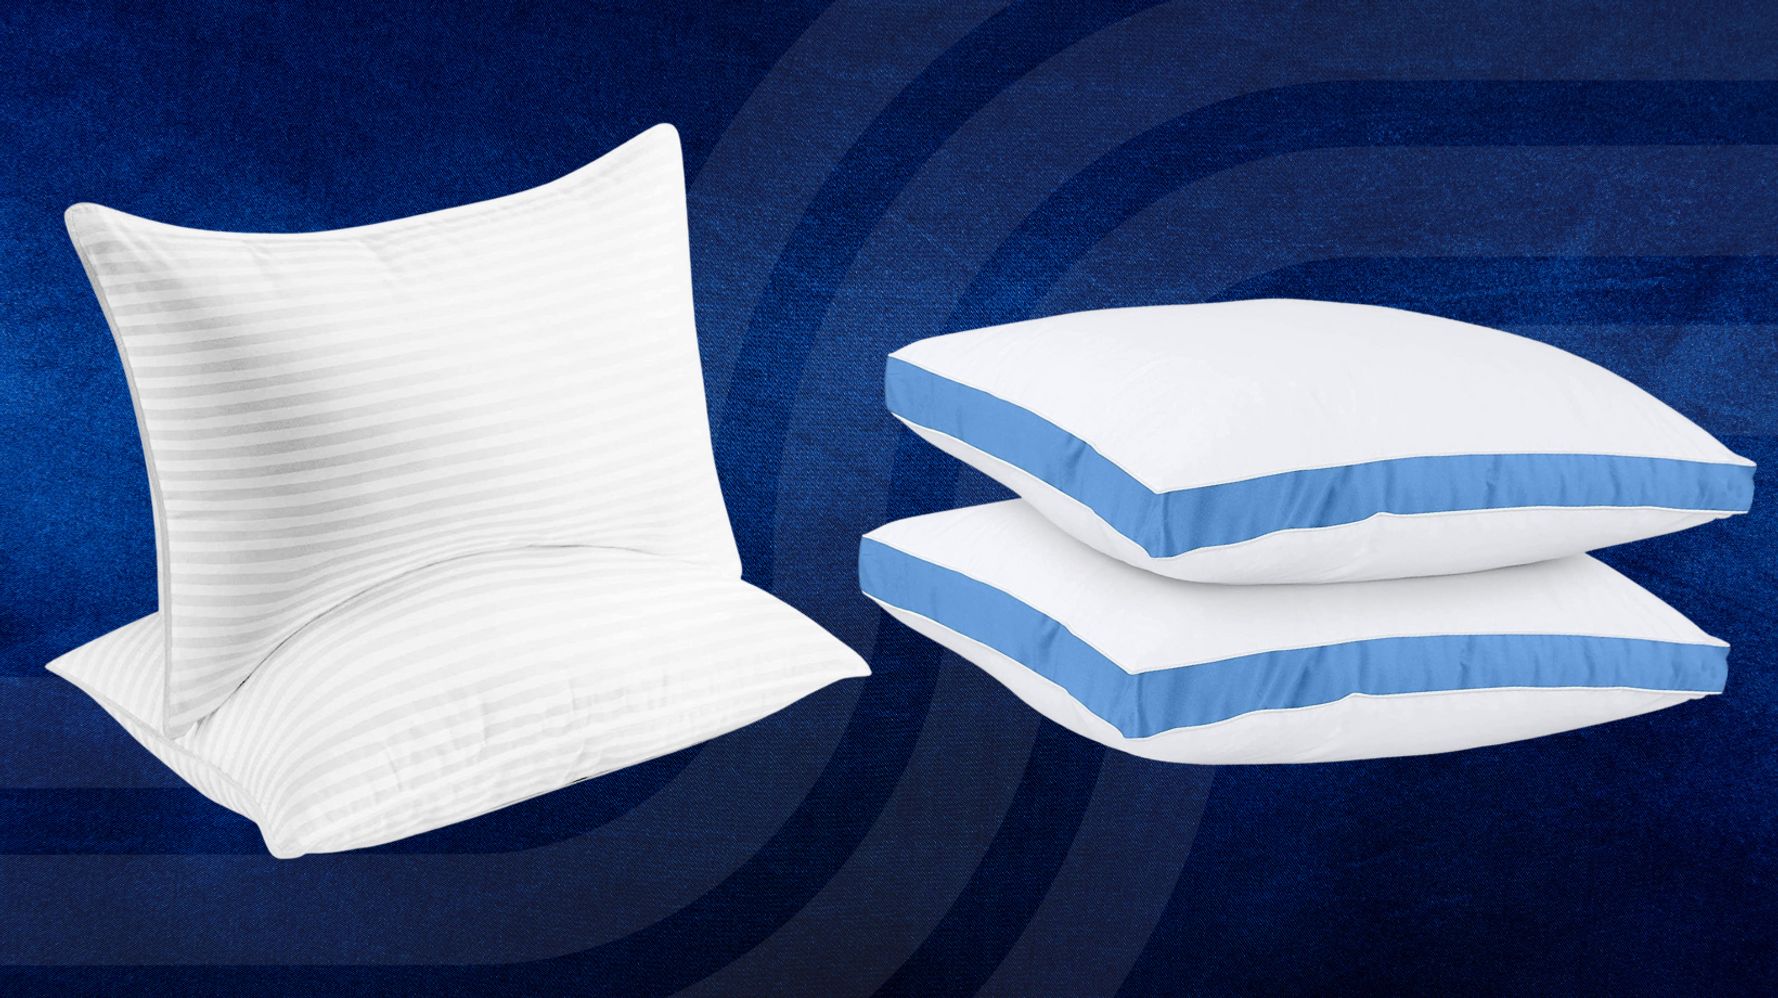 Gamer-Targeted Pillows : gaming pillow